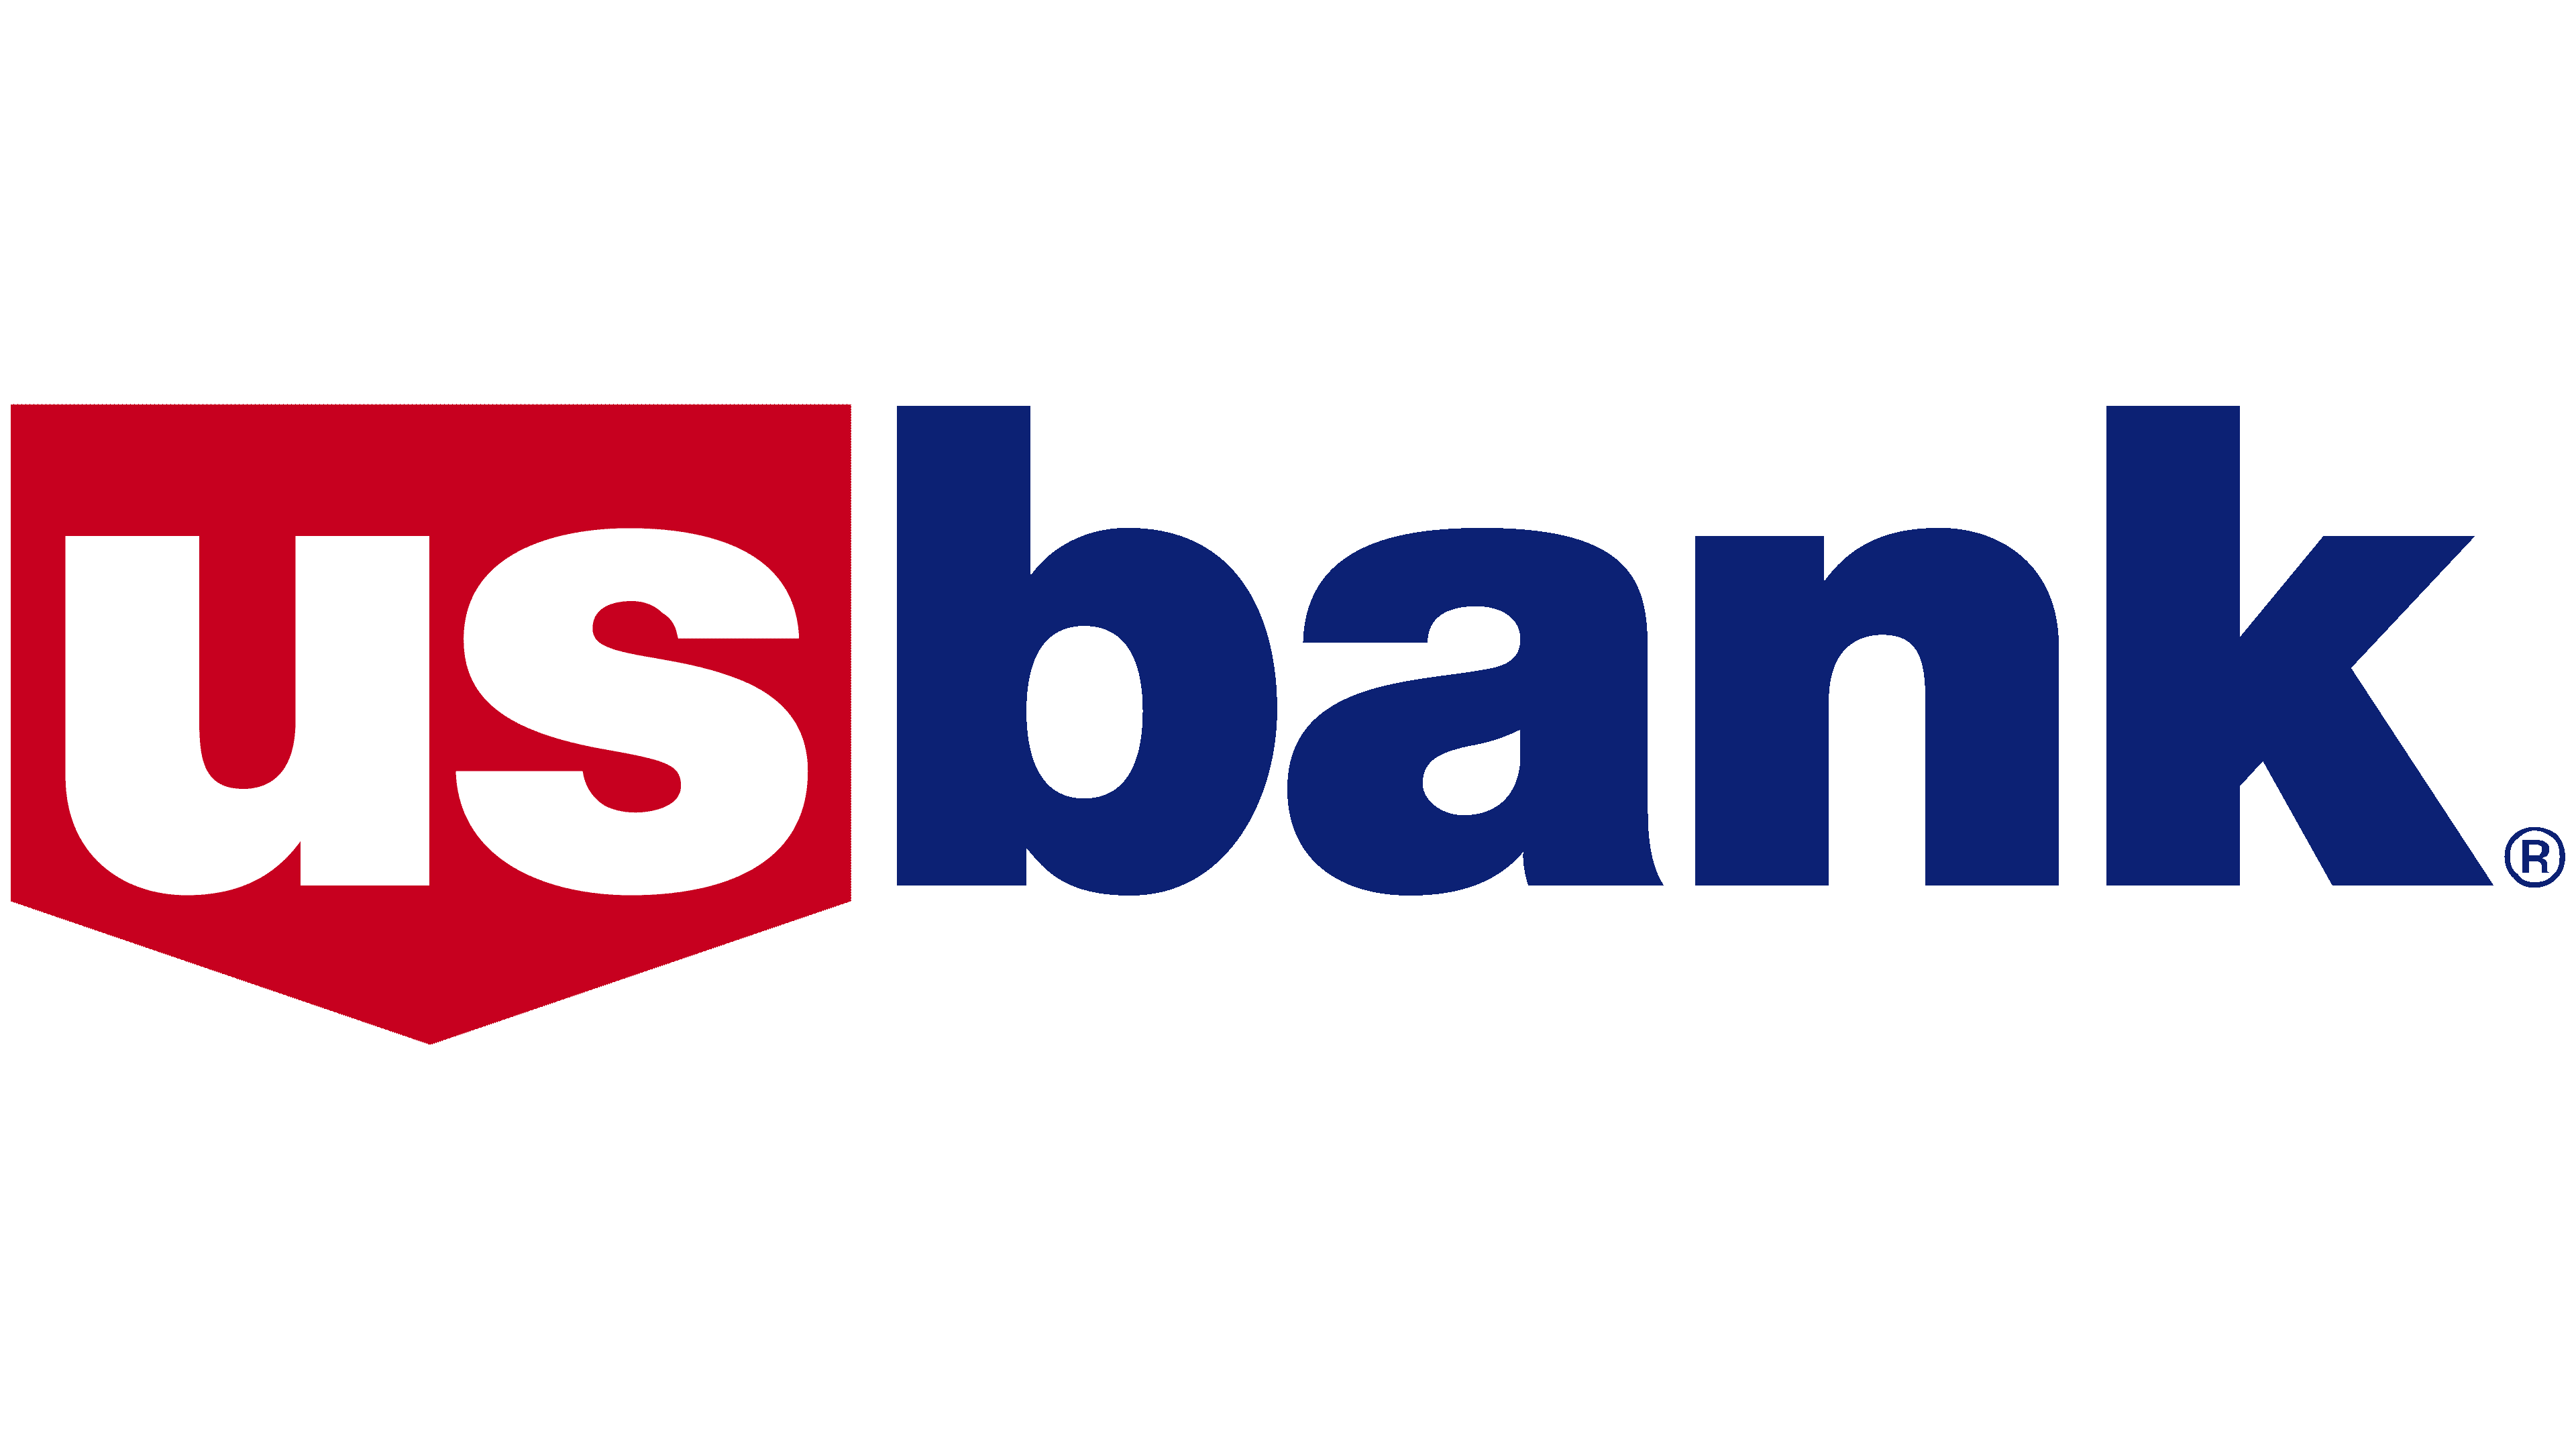 U.S.银行标识